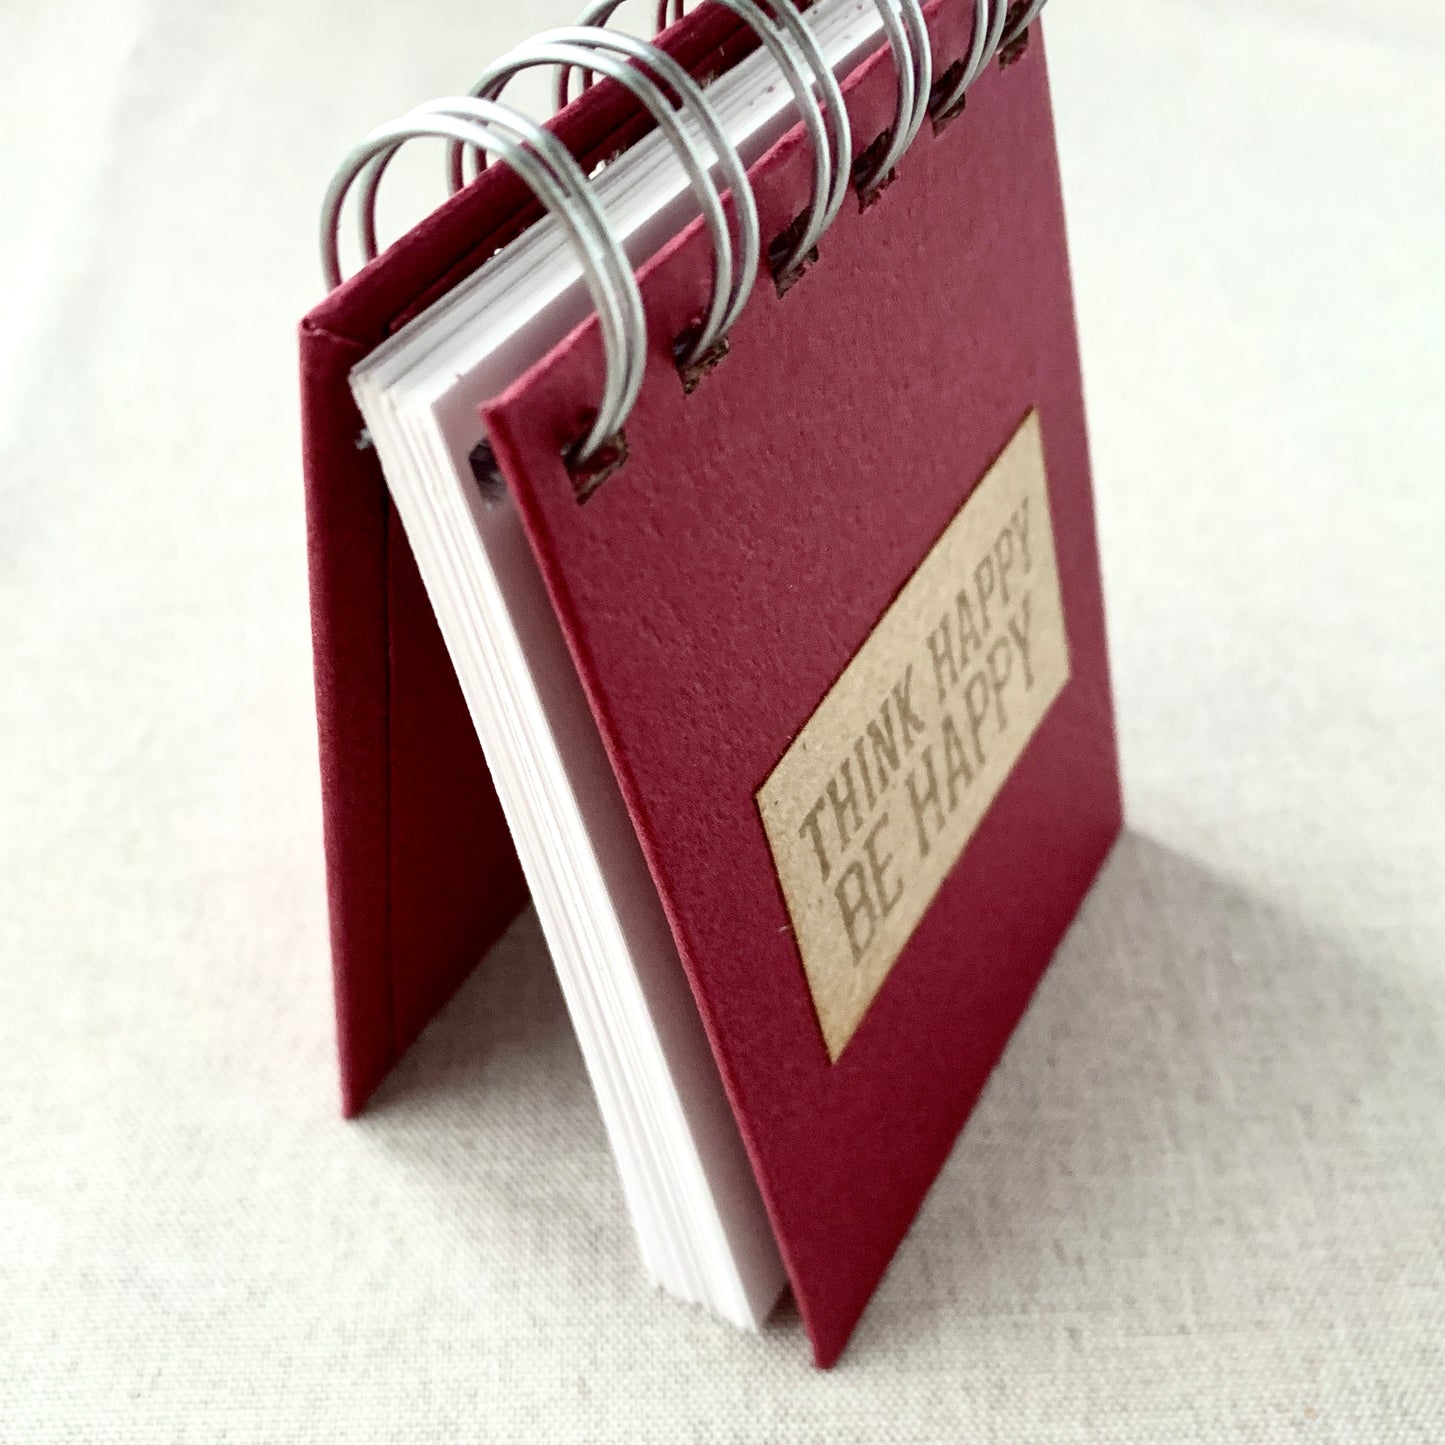 Think Happy Be Happy - Memo - Blank - Spiral Bound - Fountain Pen Notebook - Handmade Journal